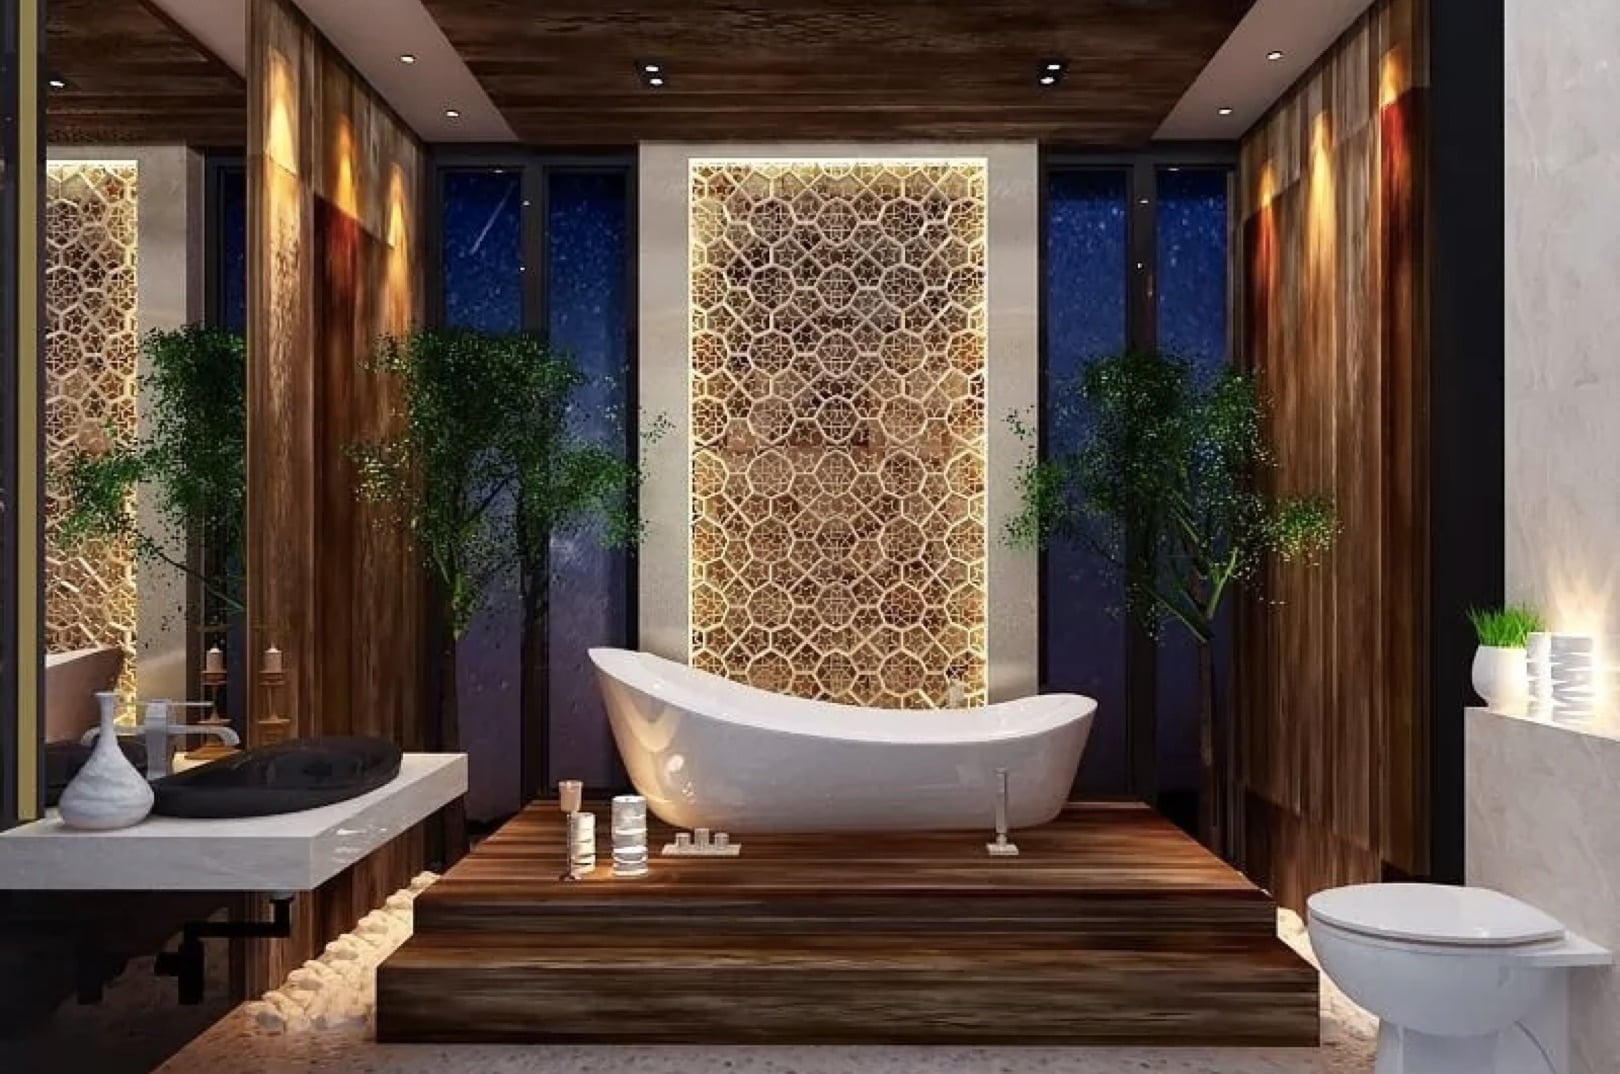 62 New Desain Kamar Mandi Dengan Bathtub Sudut Paling Banyak di Cari